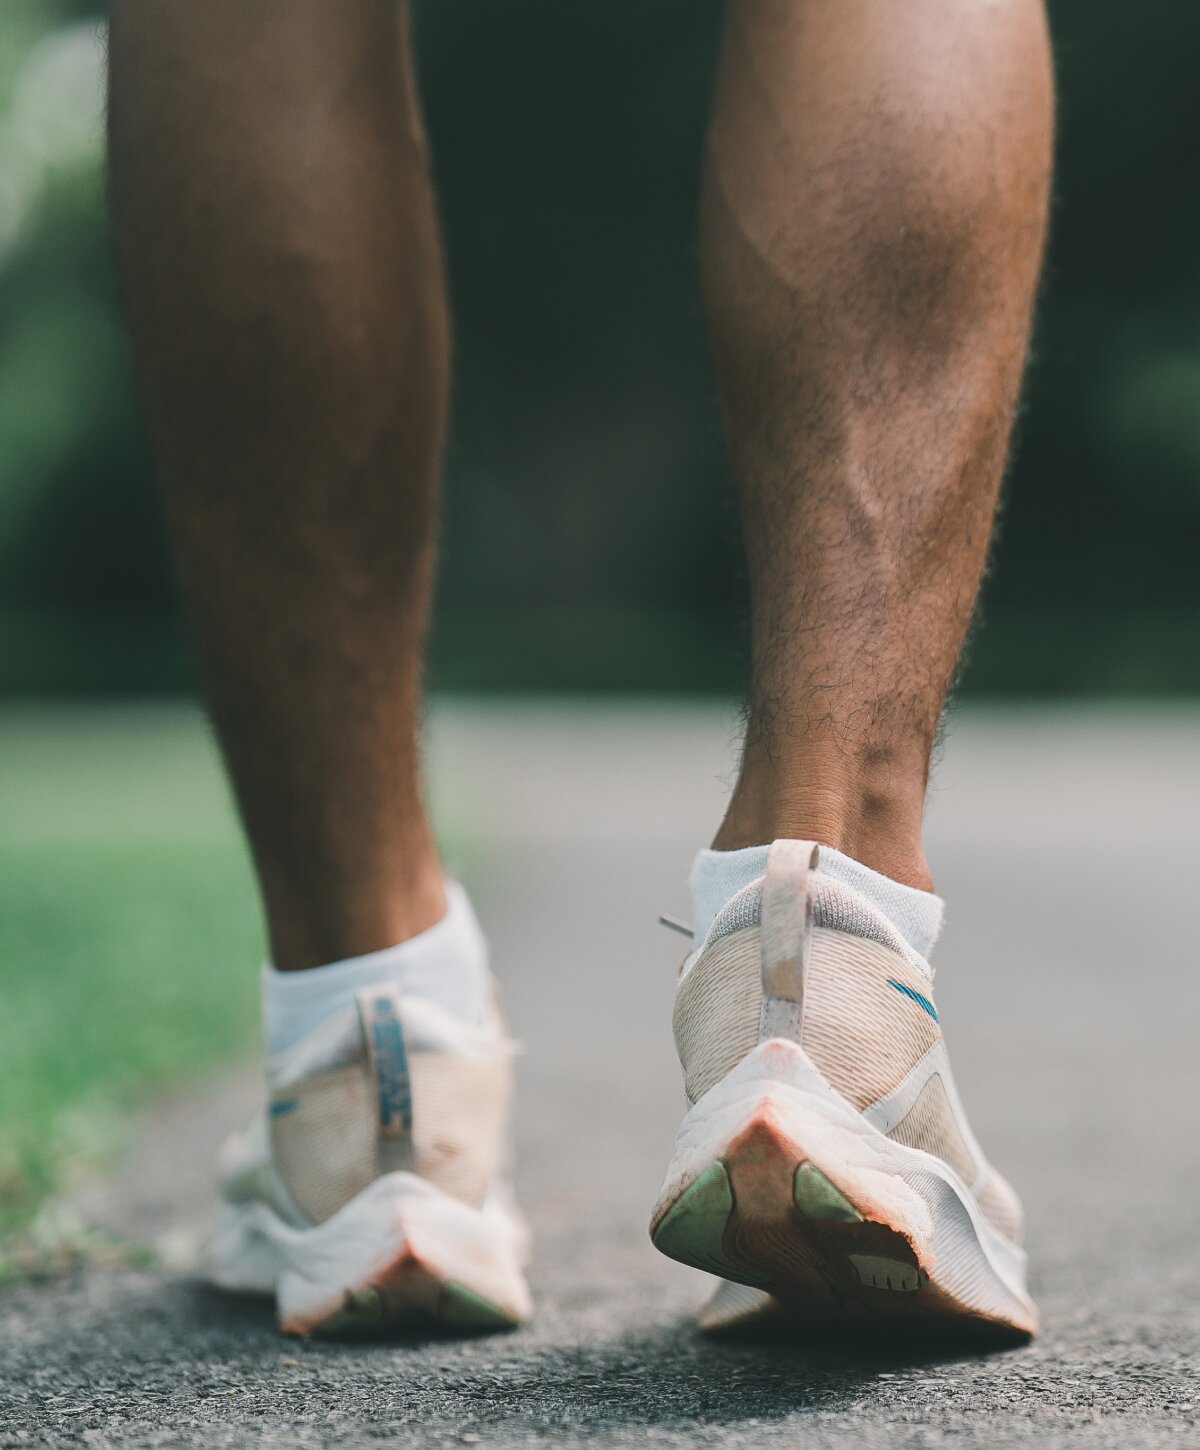 Ann Arbor ingrown toenail treatment model with white shoes